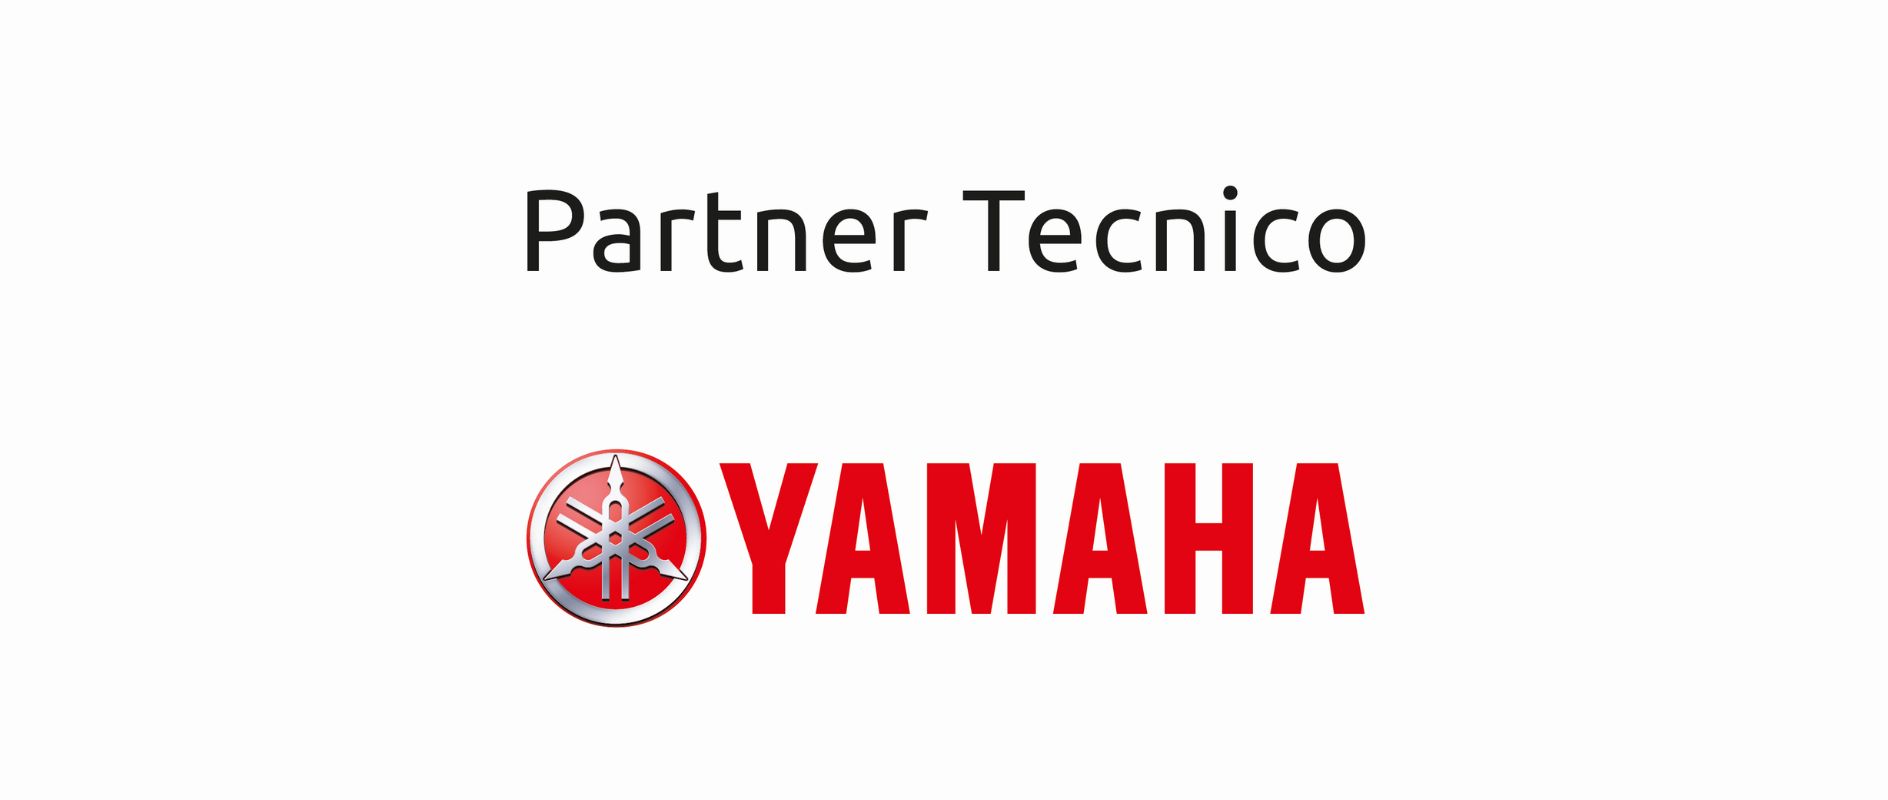 partner tecnico yamaha val di lima off road